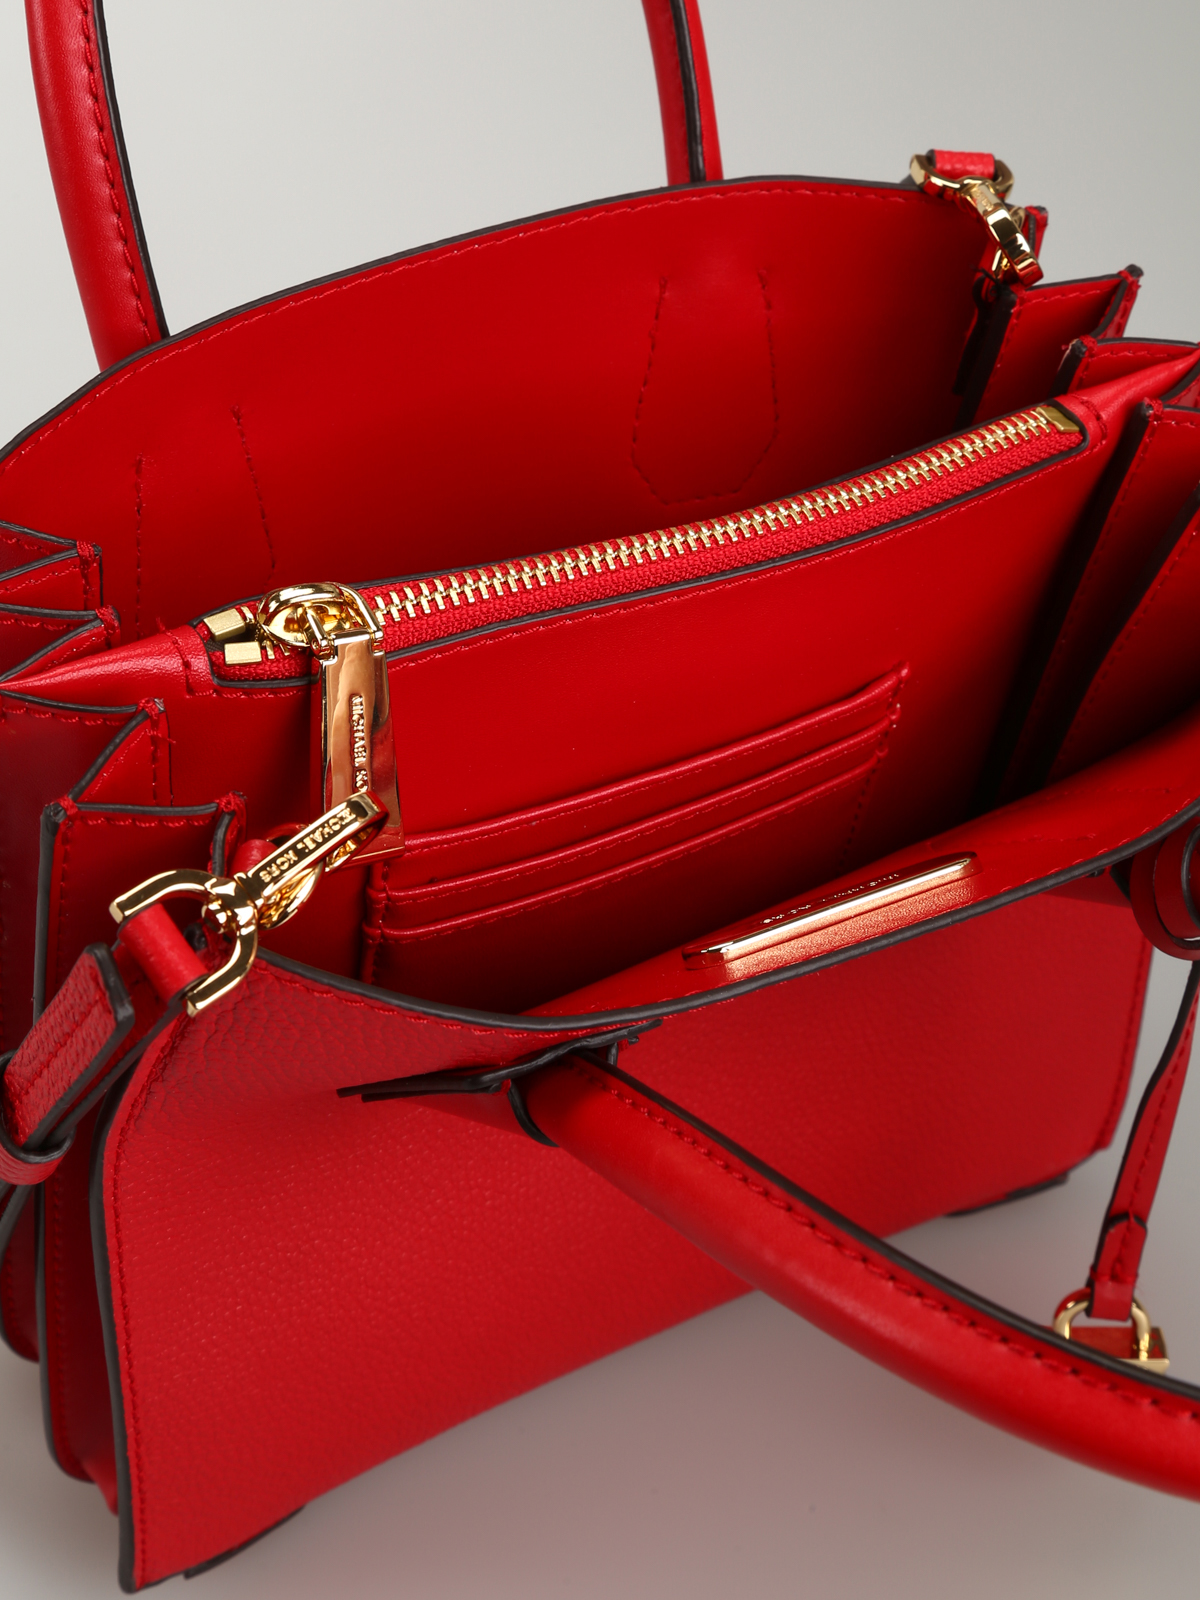 Michael Kors - Mercer M red leather bag 